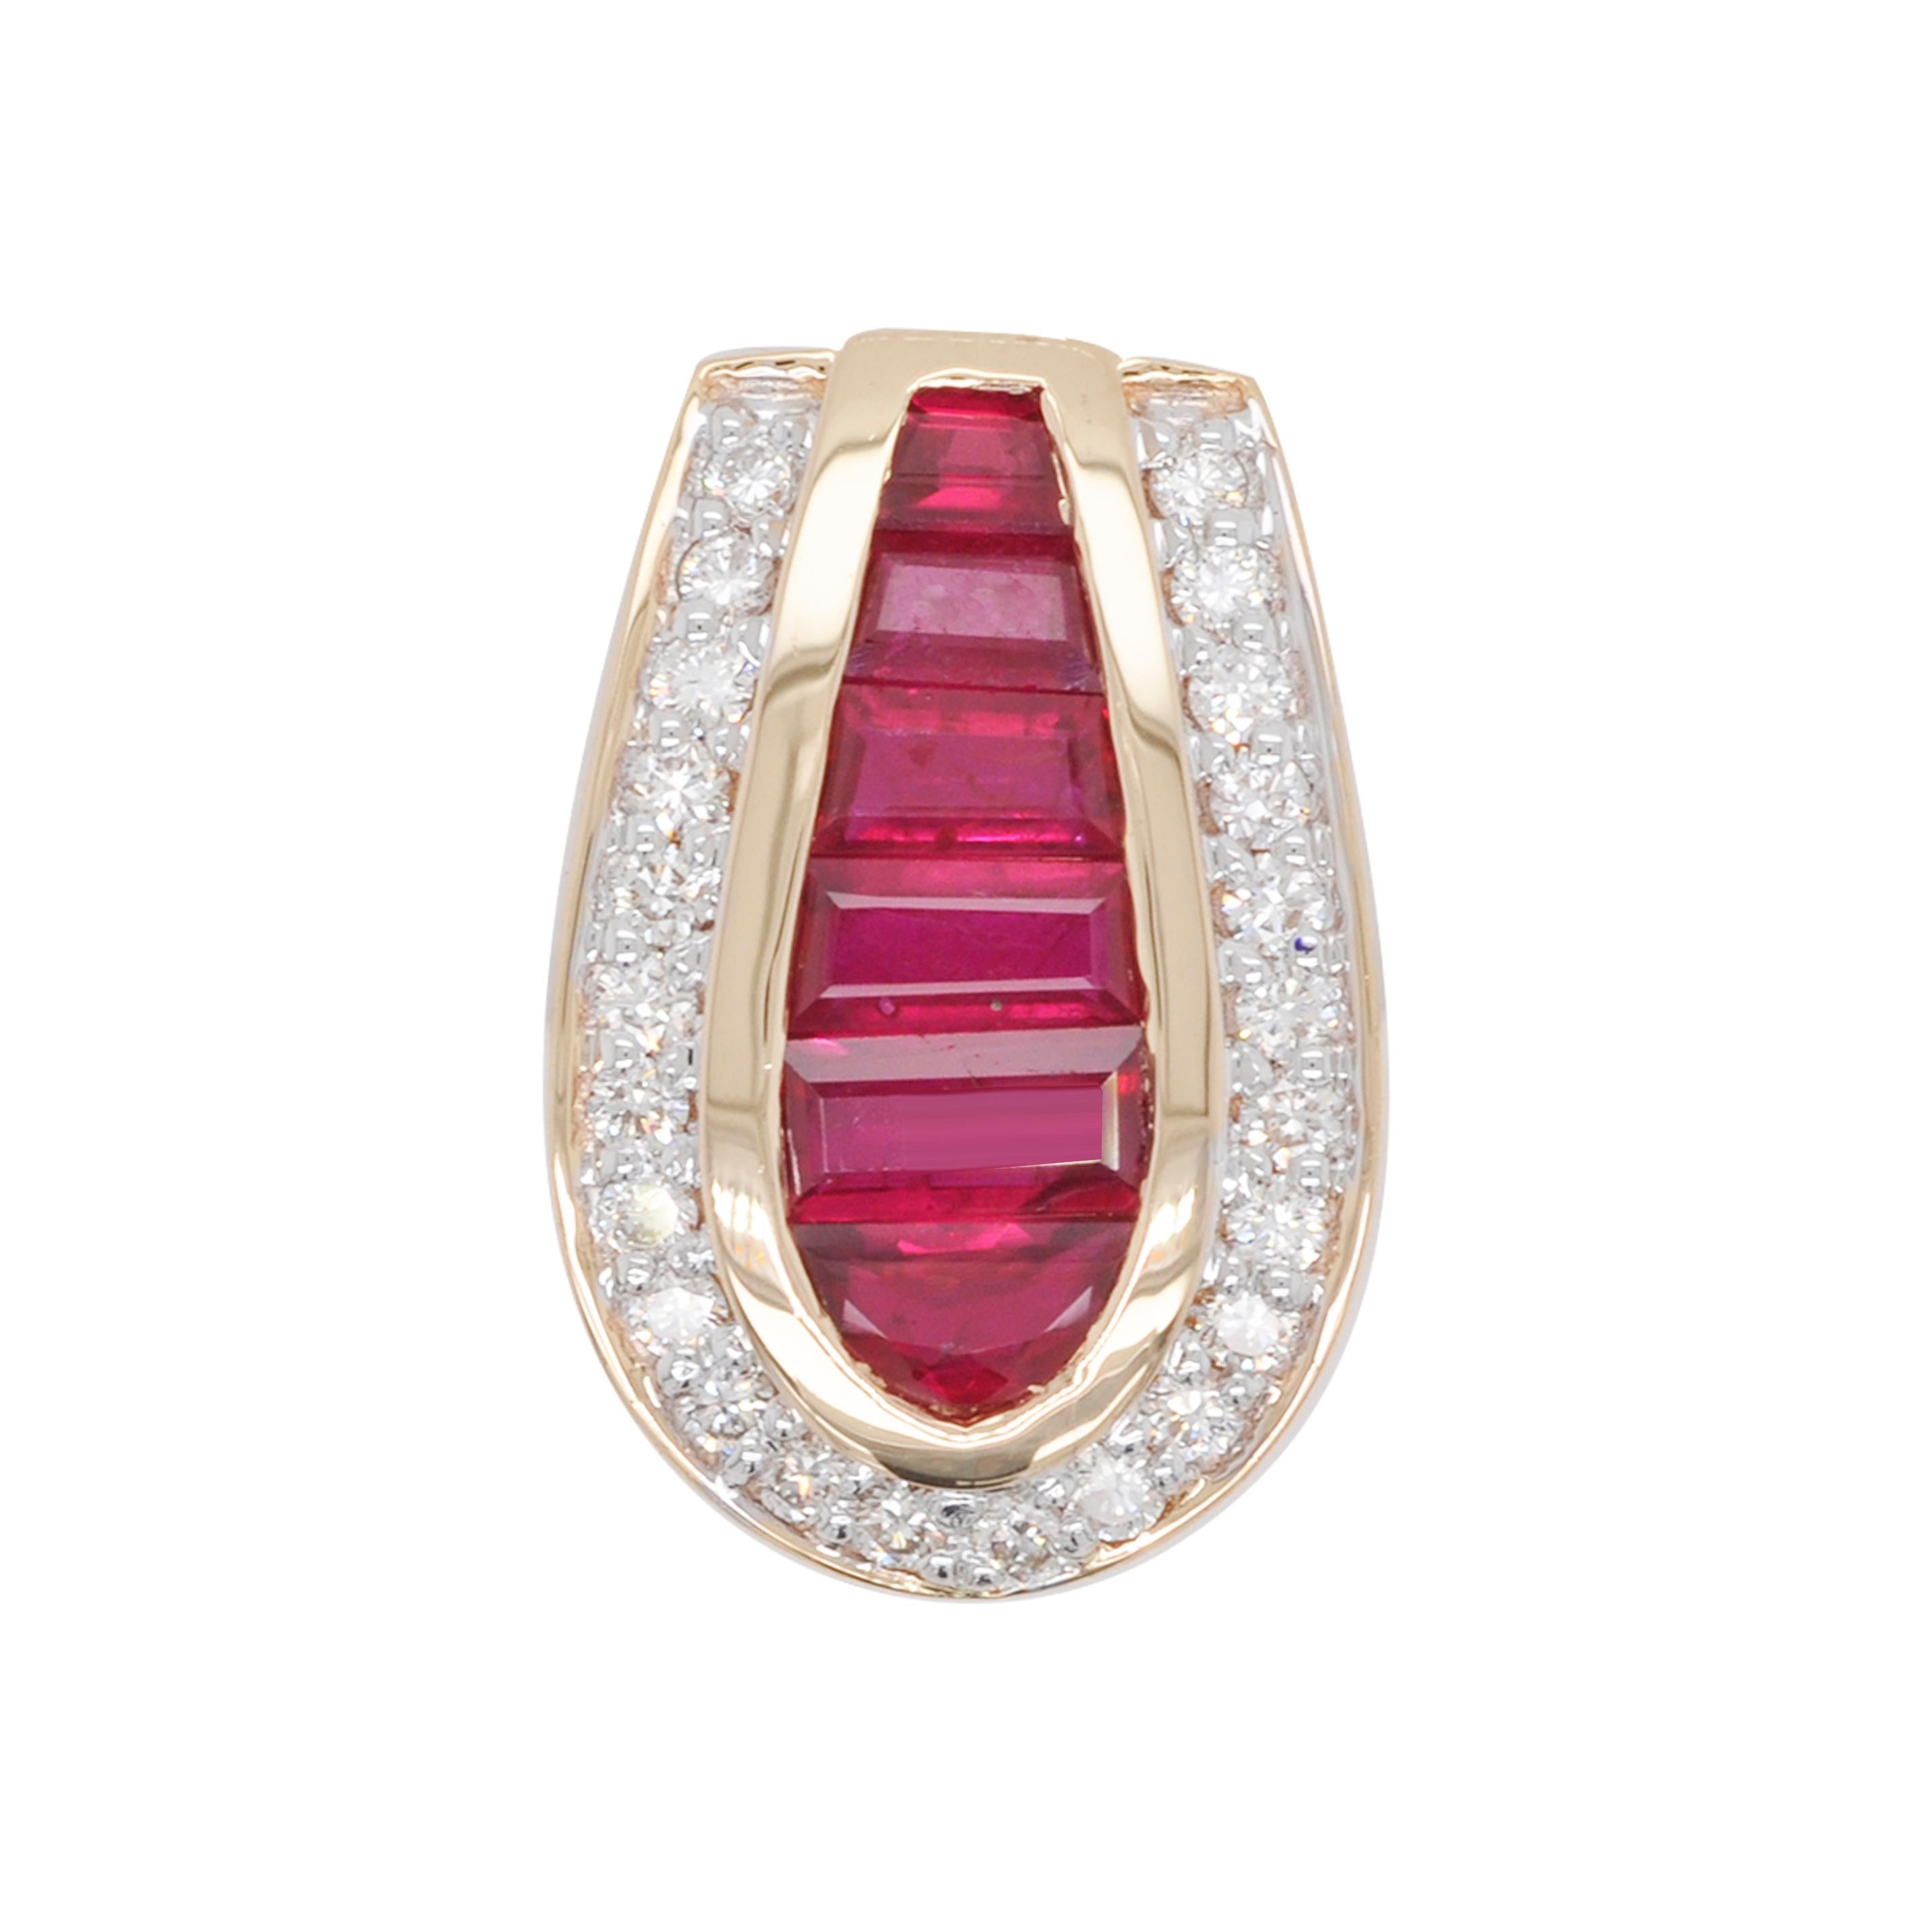 Art Deco 18 Karat Gold Diamond Burma Ruby Baguette Pendant Necklace Earring Ring Set